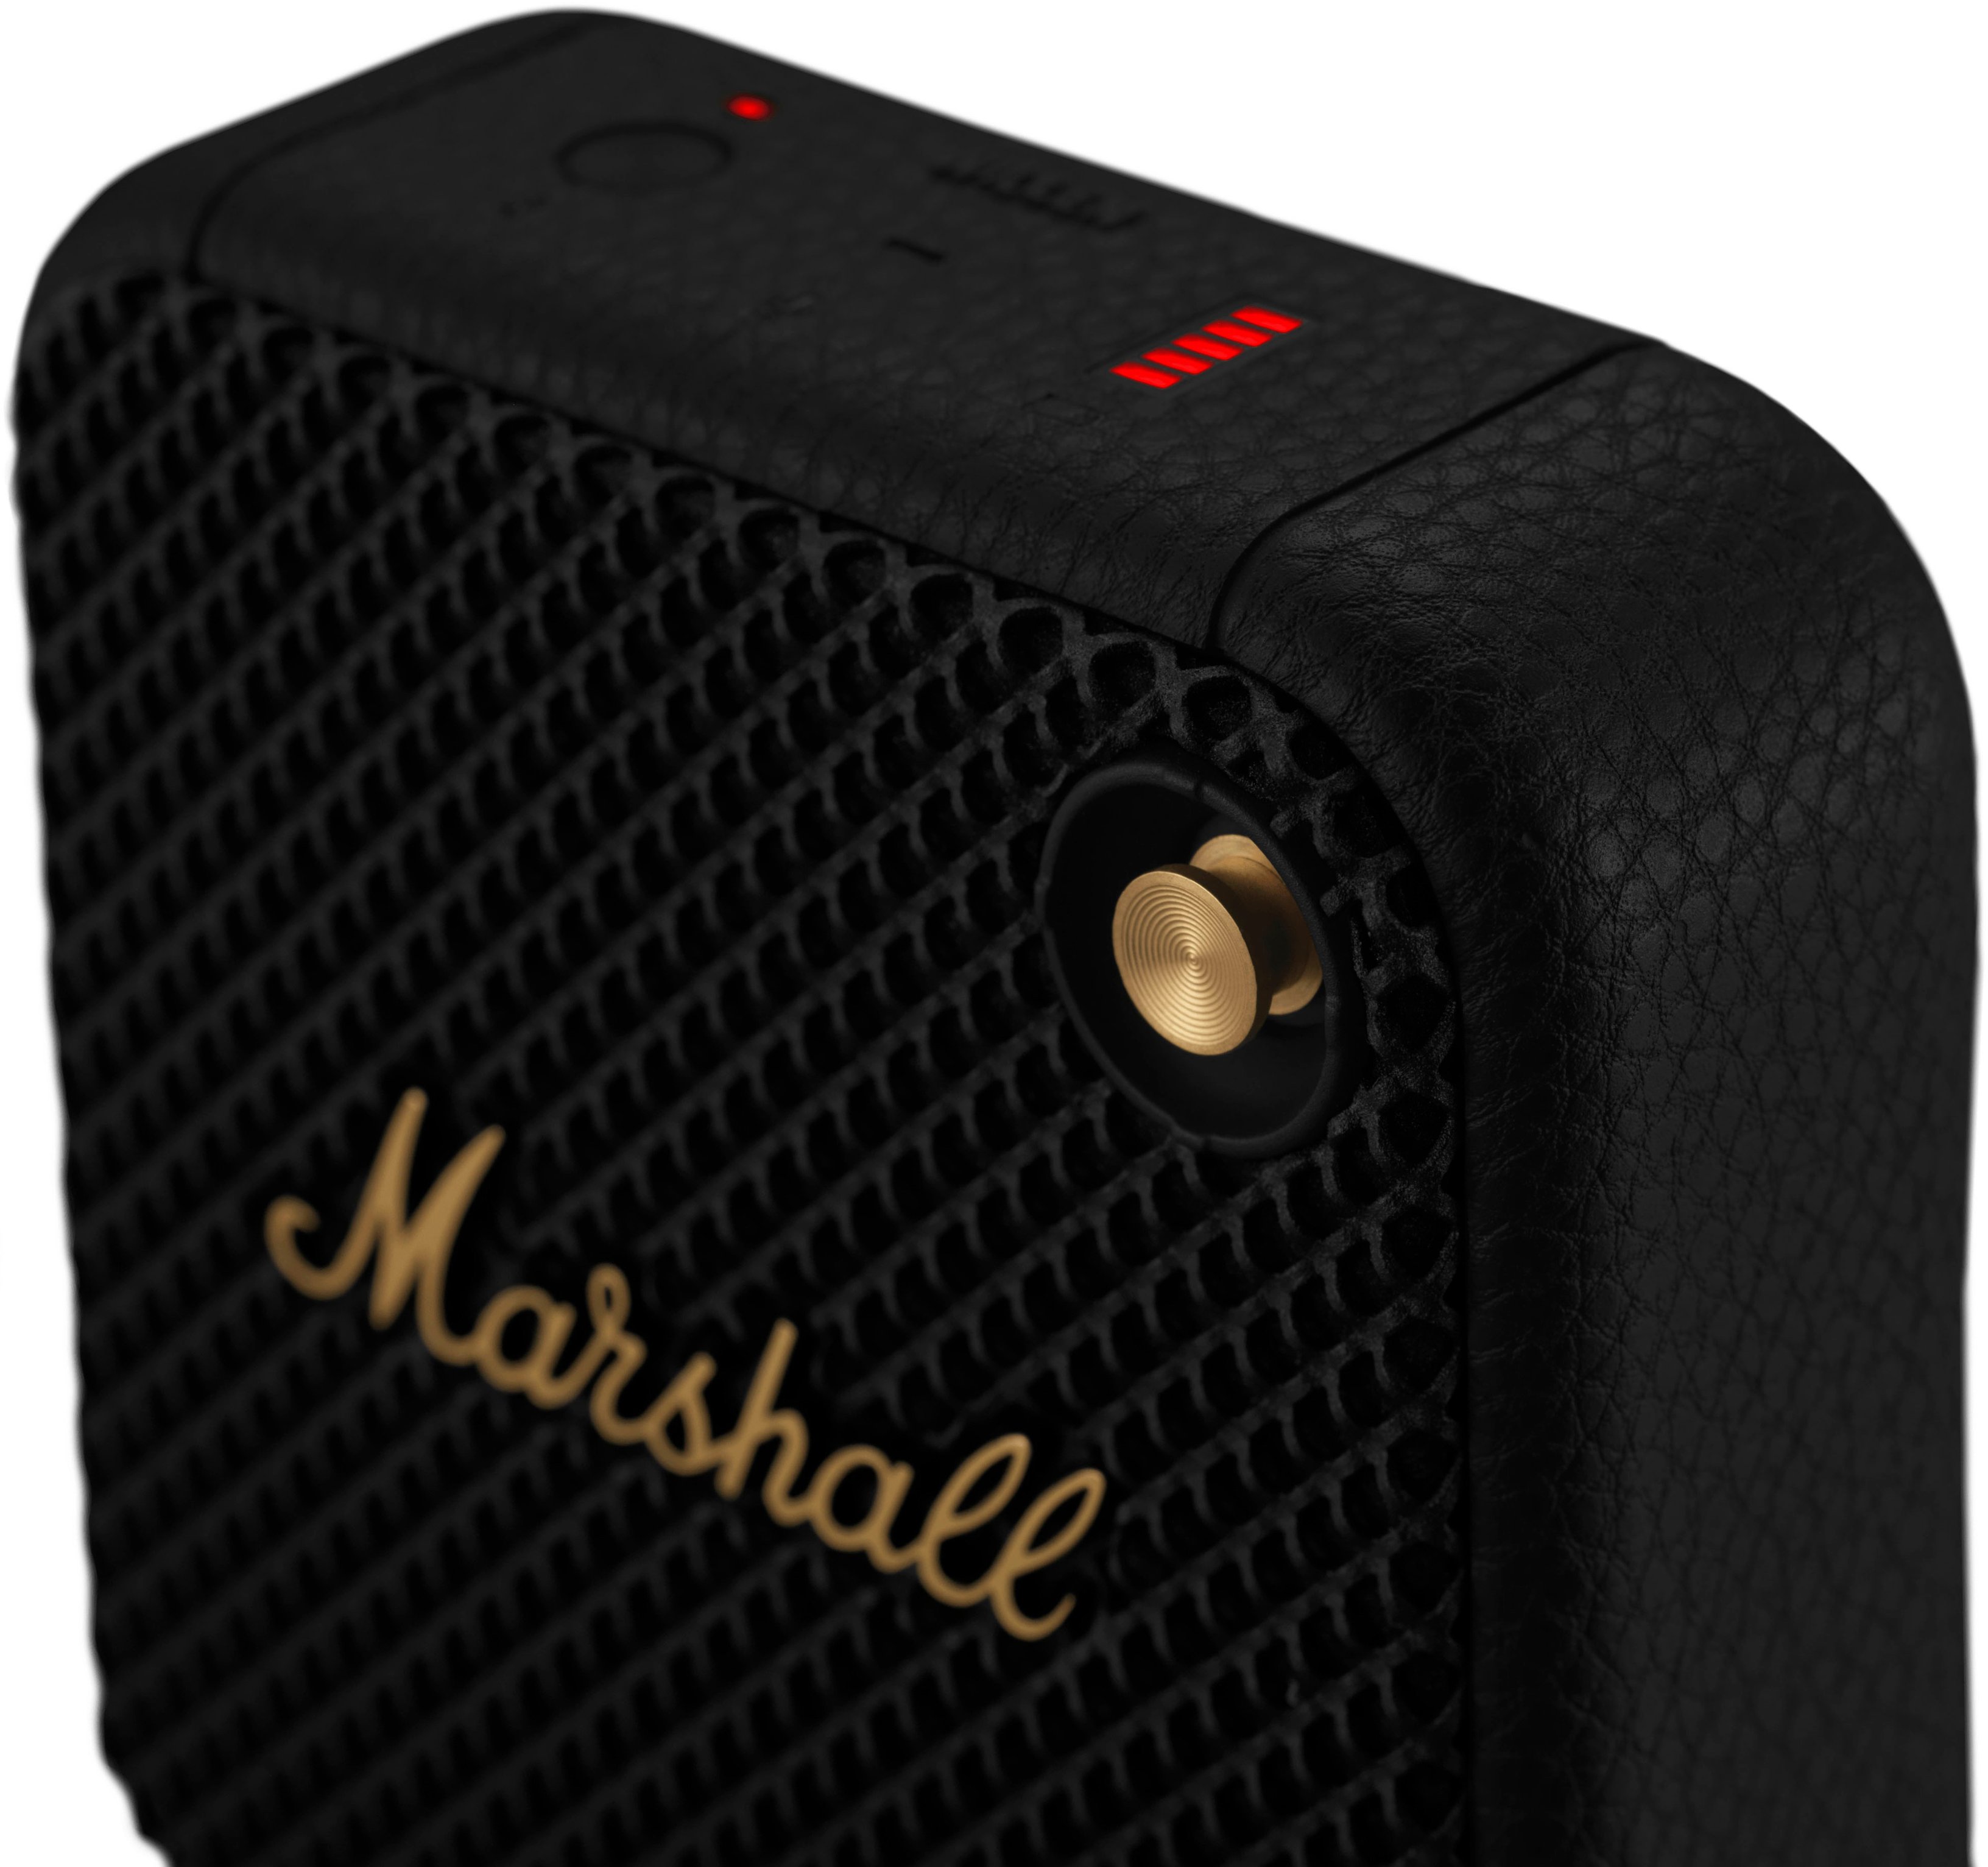 Marshall Willen BT Portable Speaker Black & Brass 1006059 - Best Buy